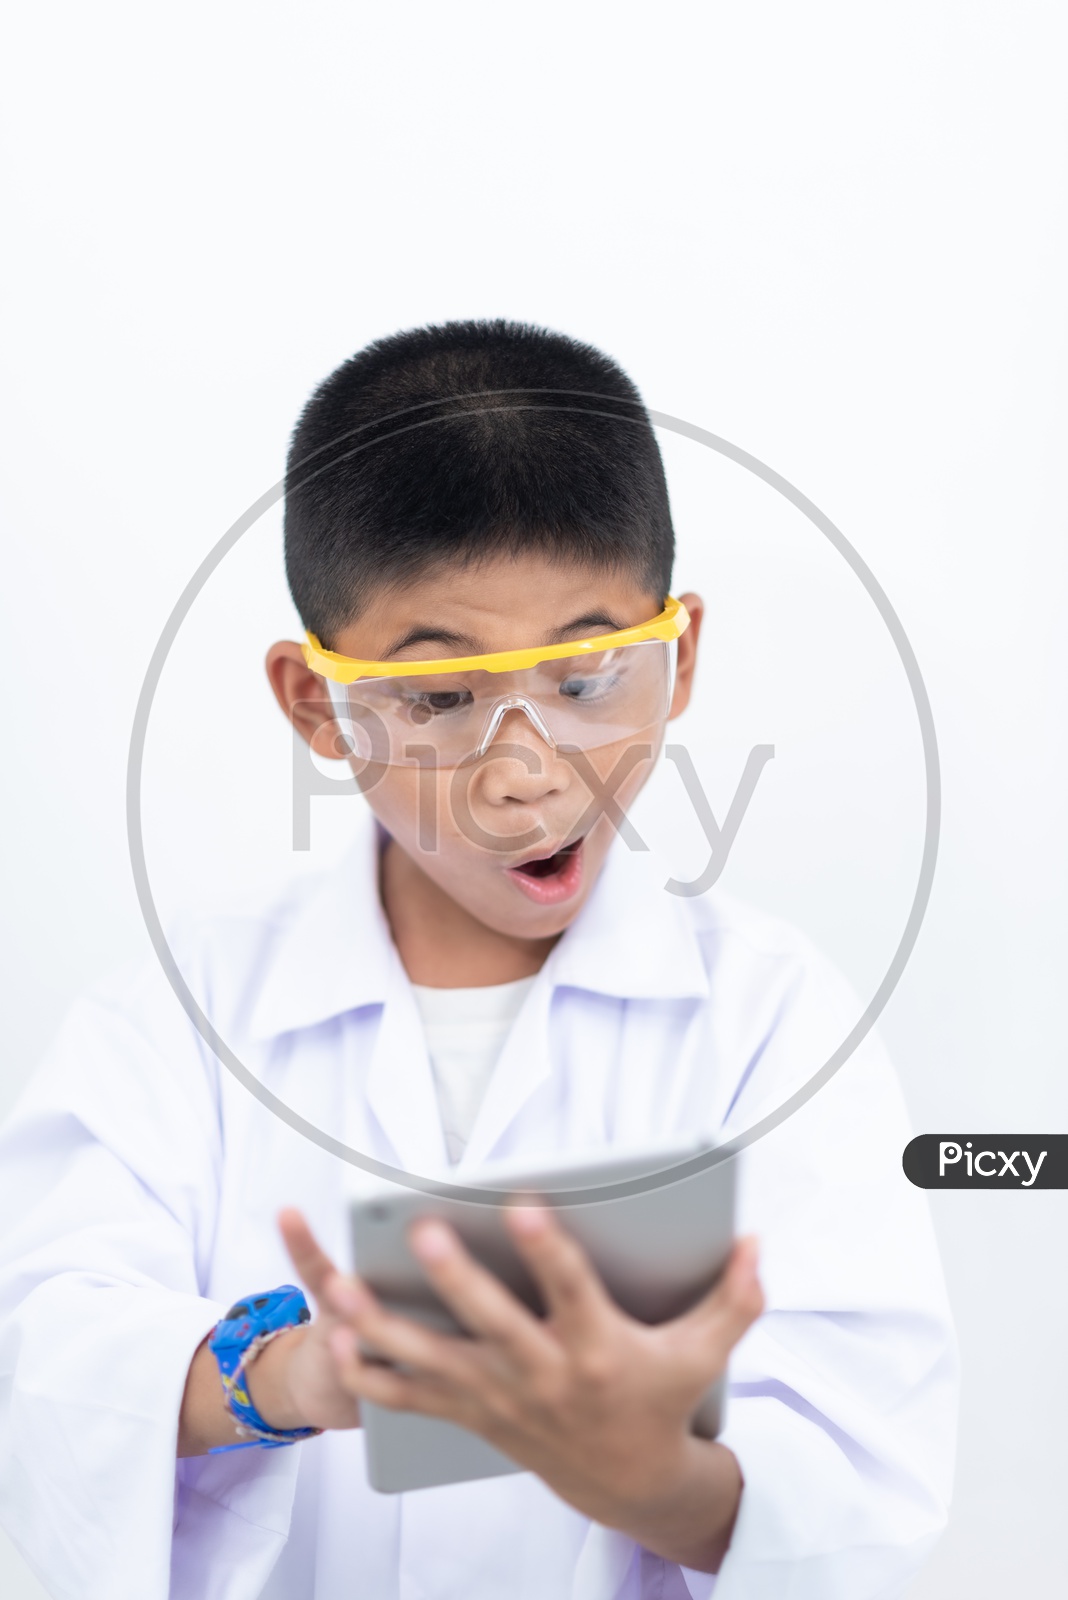 Curious boy Enjoying Learning In a Laboratory